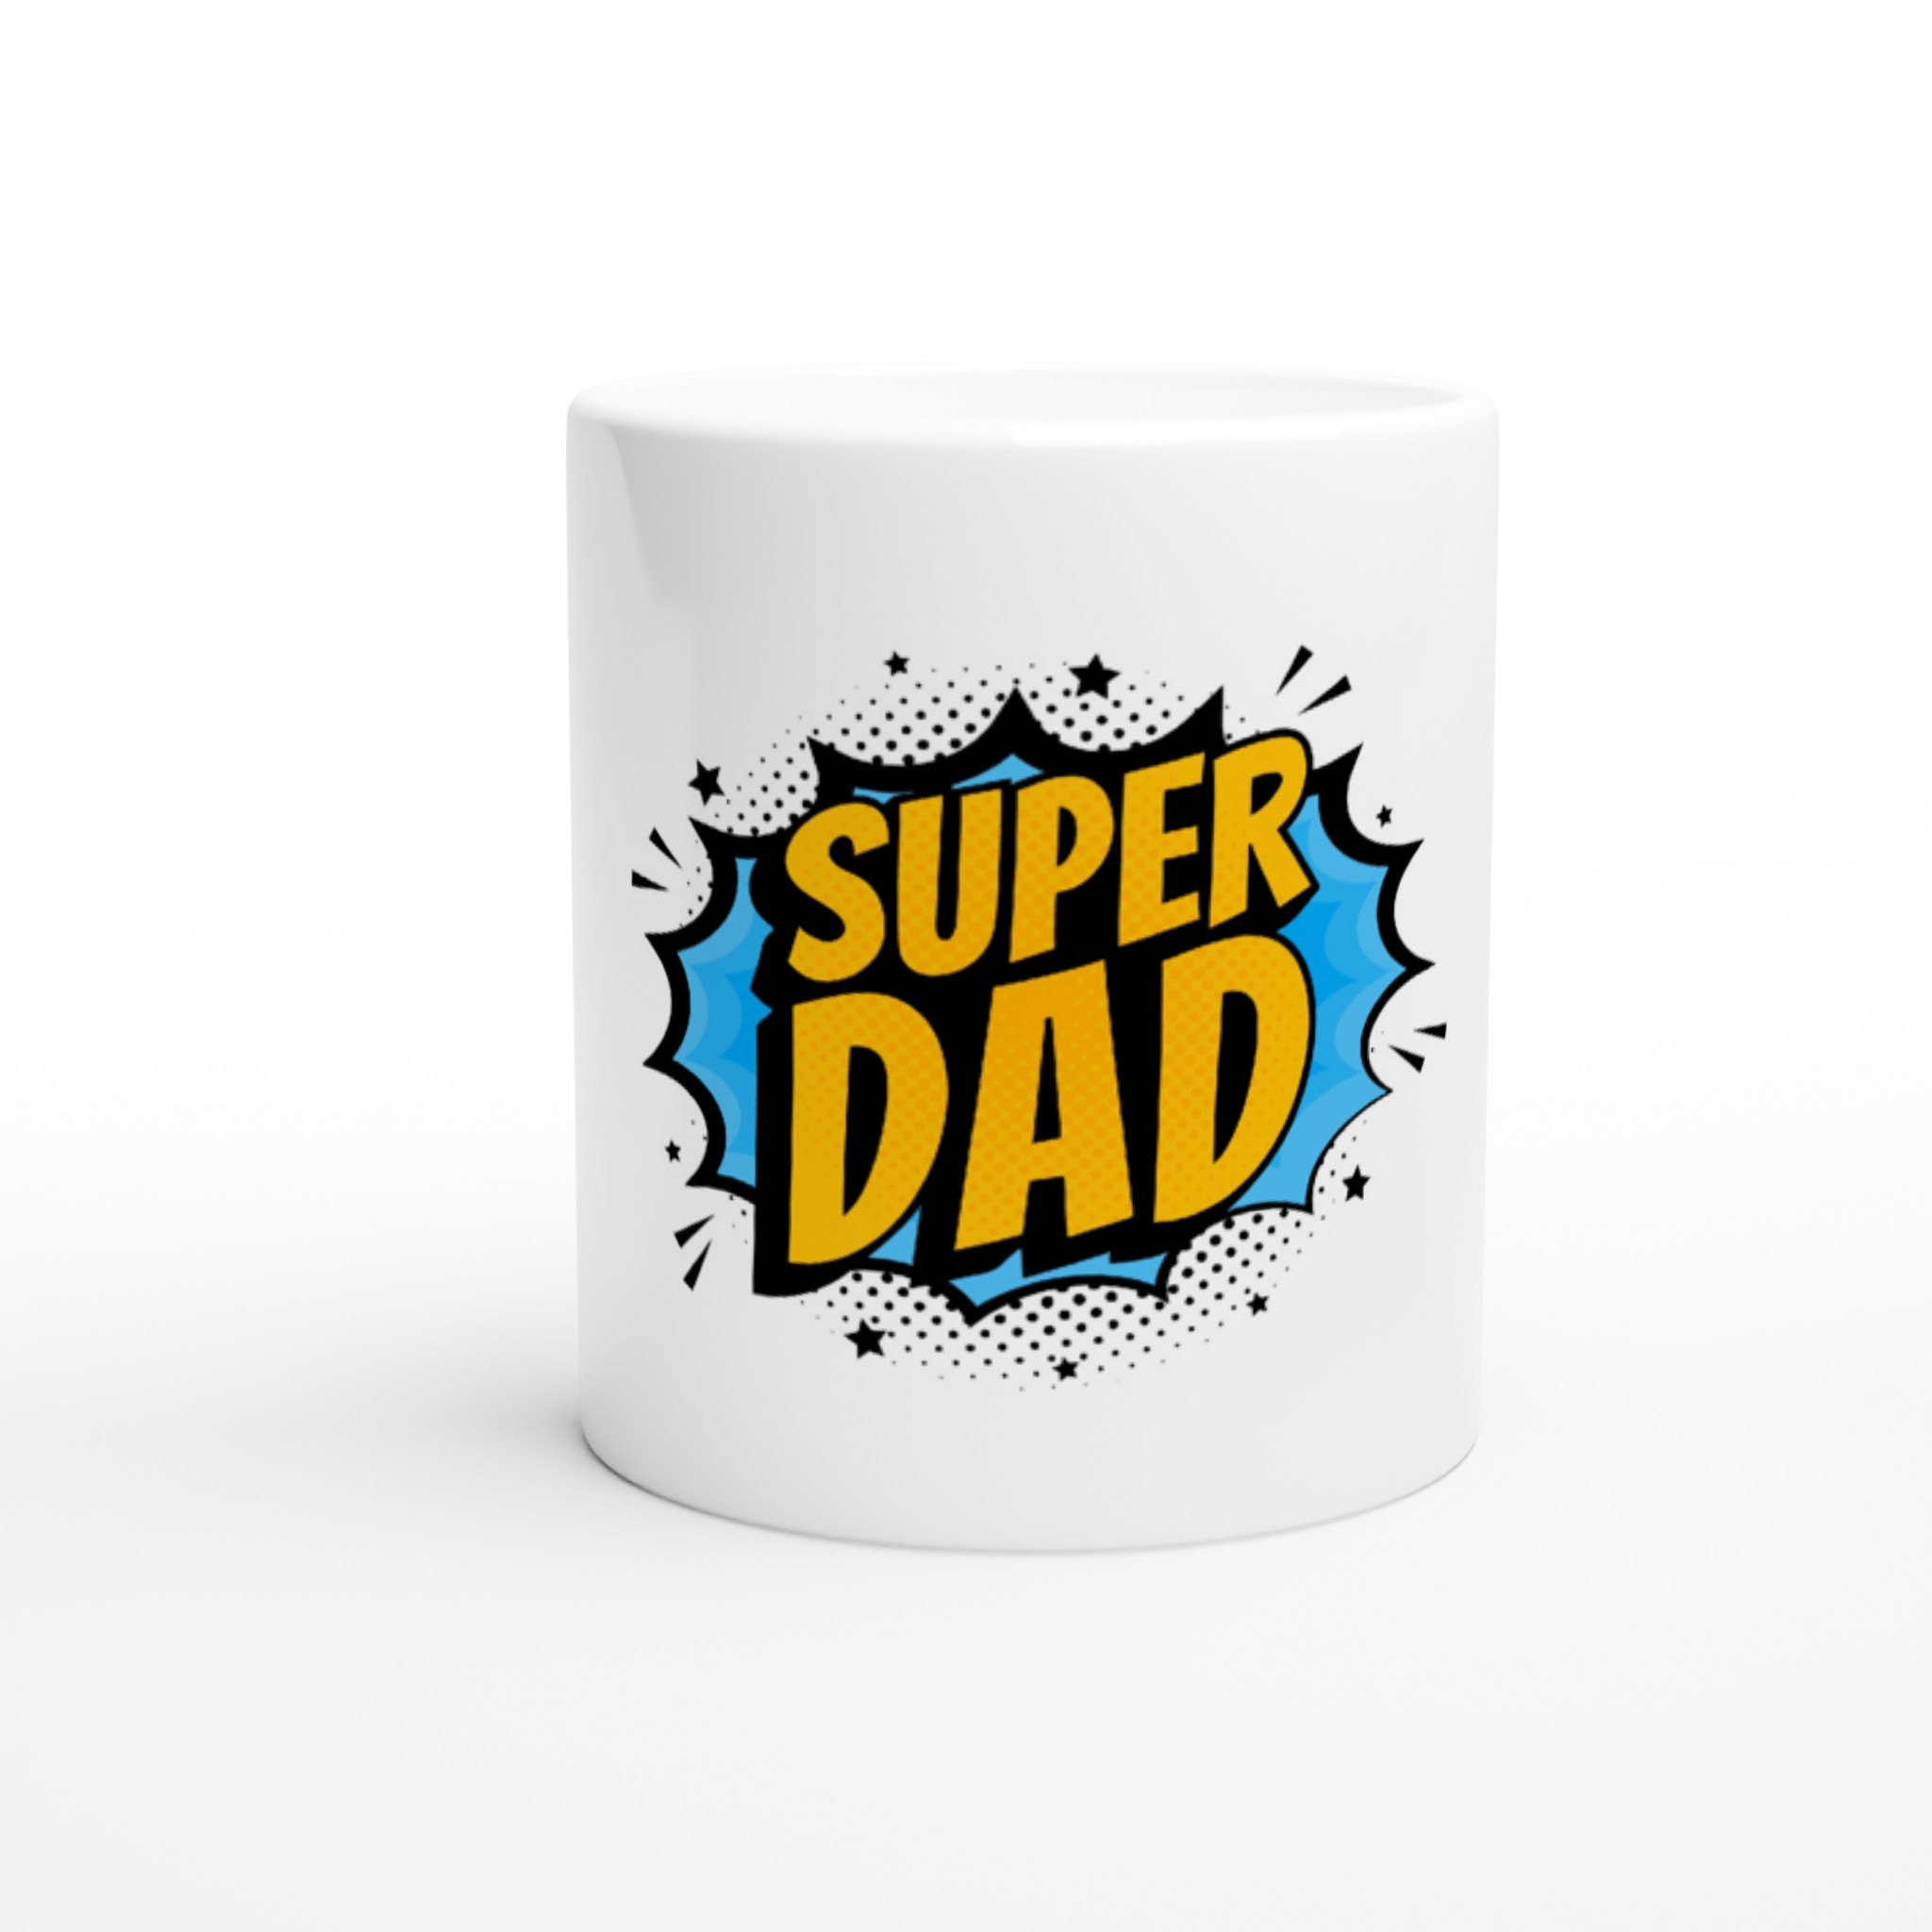 “Super Dad” Mug